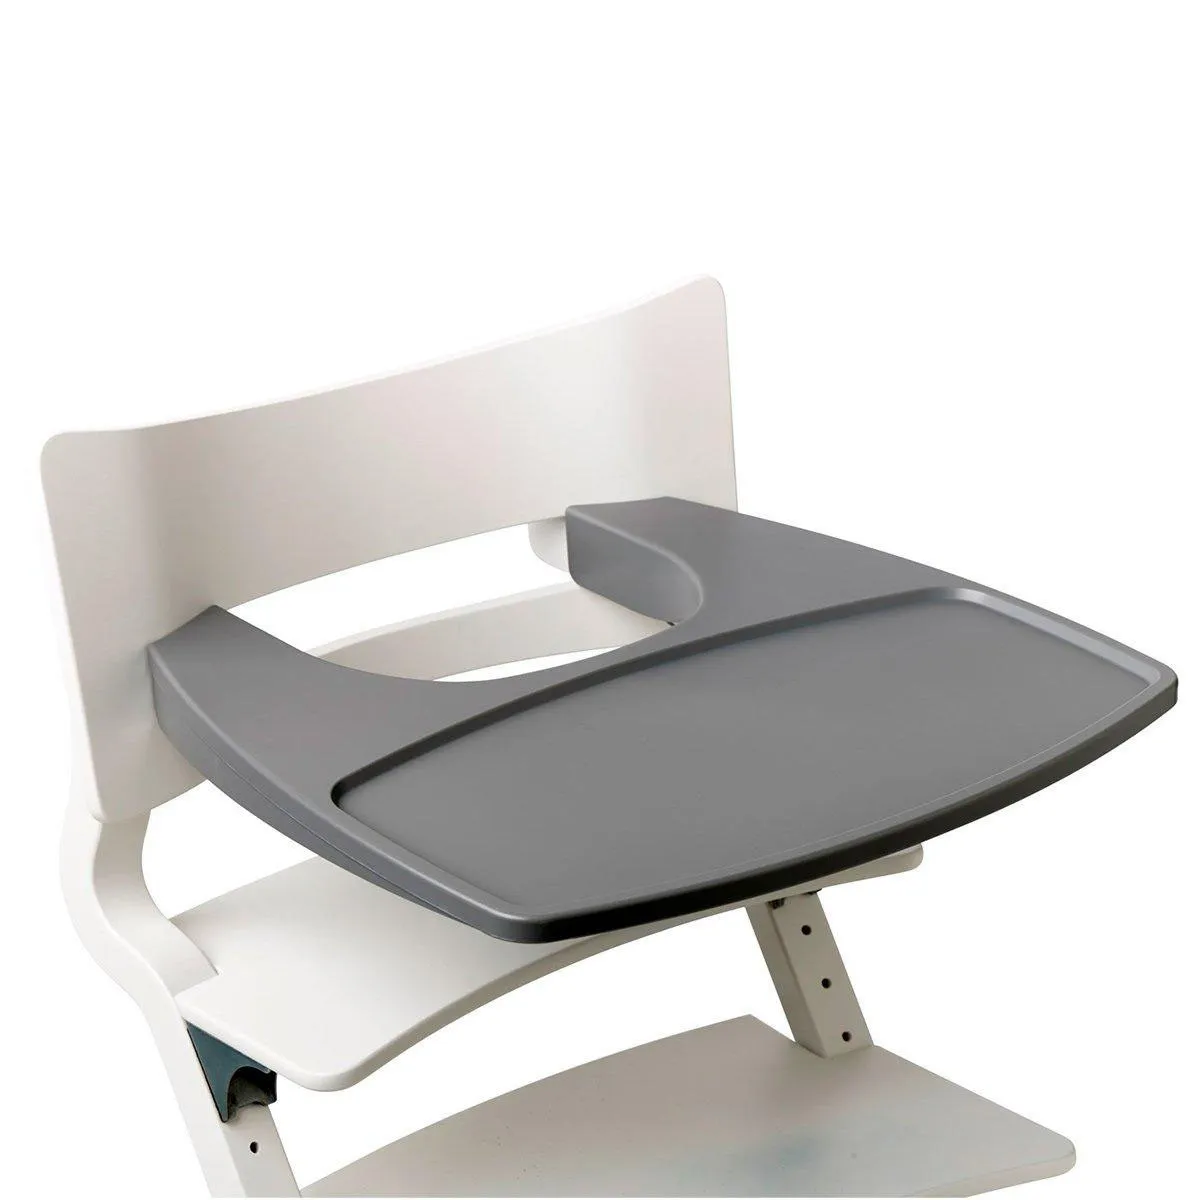 Leander tacna za stolicu, 44x41cm, Grey